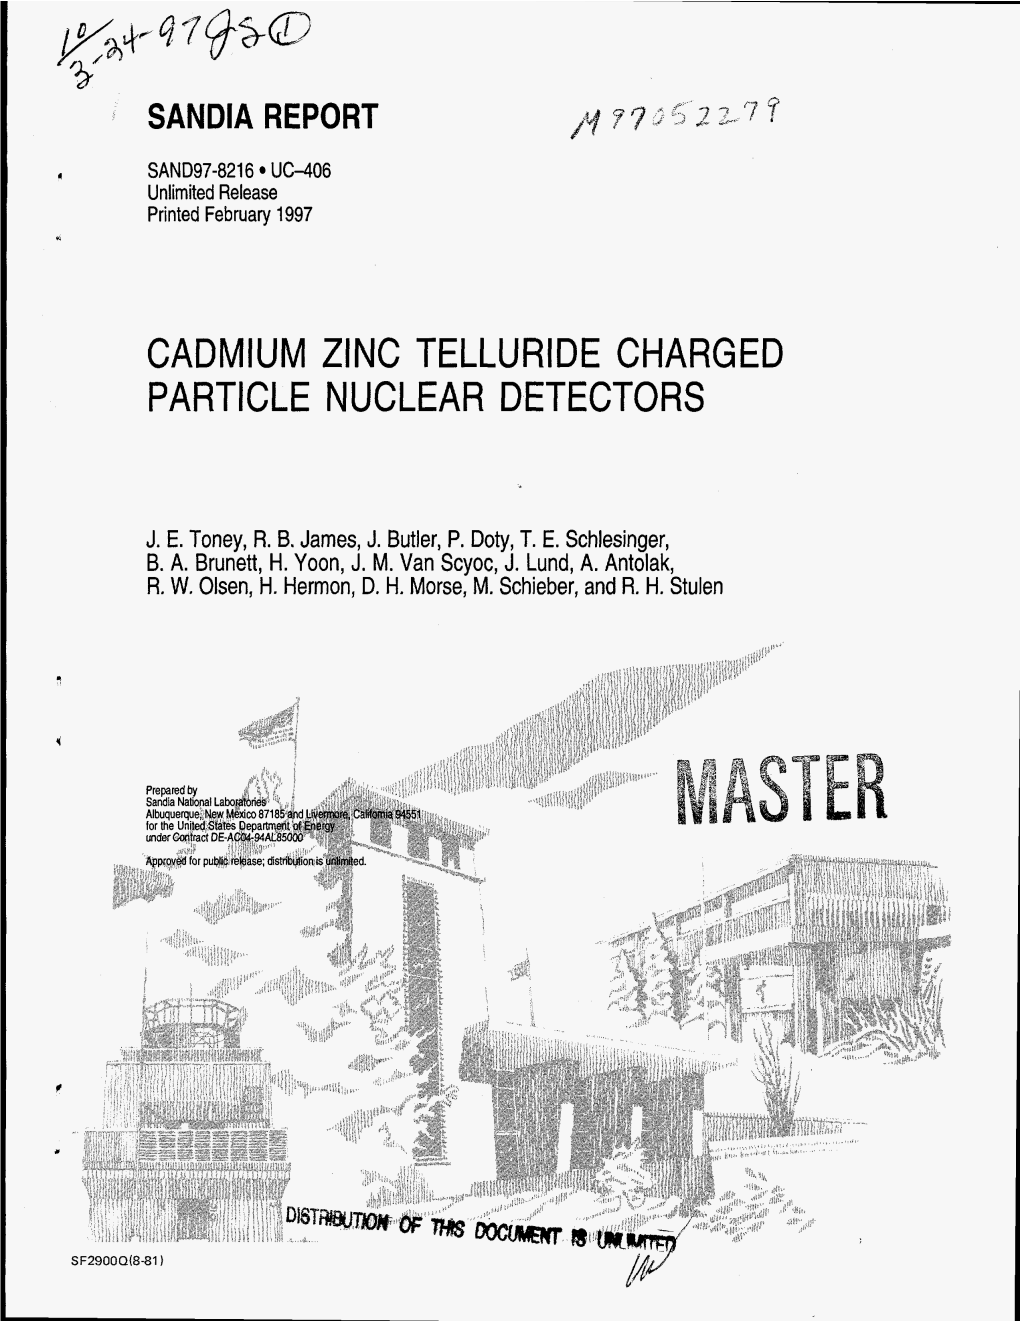 Cadmium Zinc Telluride Charged Particle Nuclear Detectors